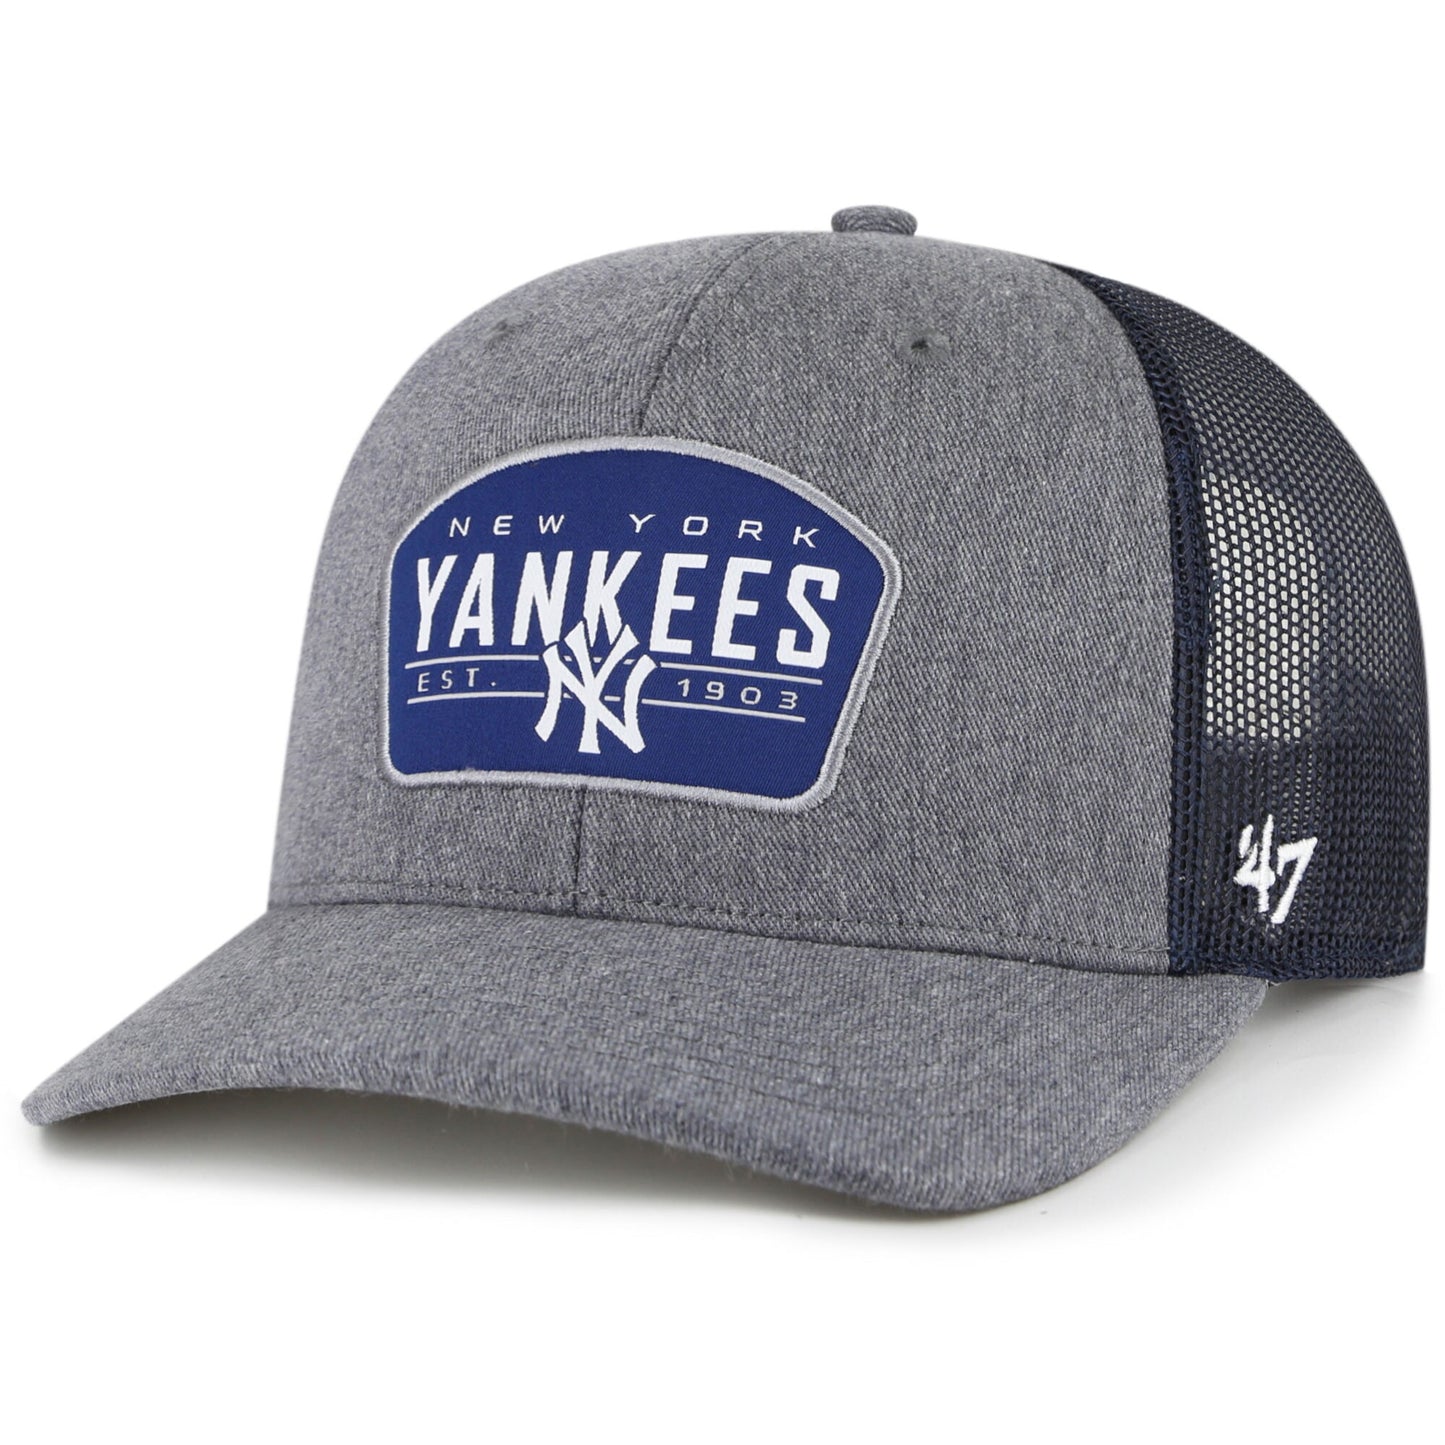 New York Yankees '47 Slate Trucker Snapback Hat - Charcoal/Navy